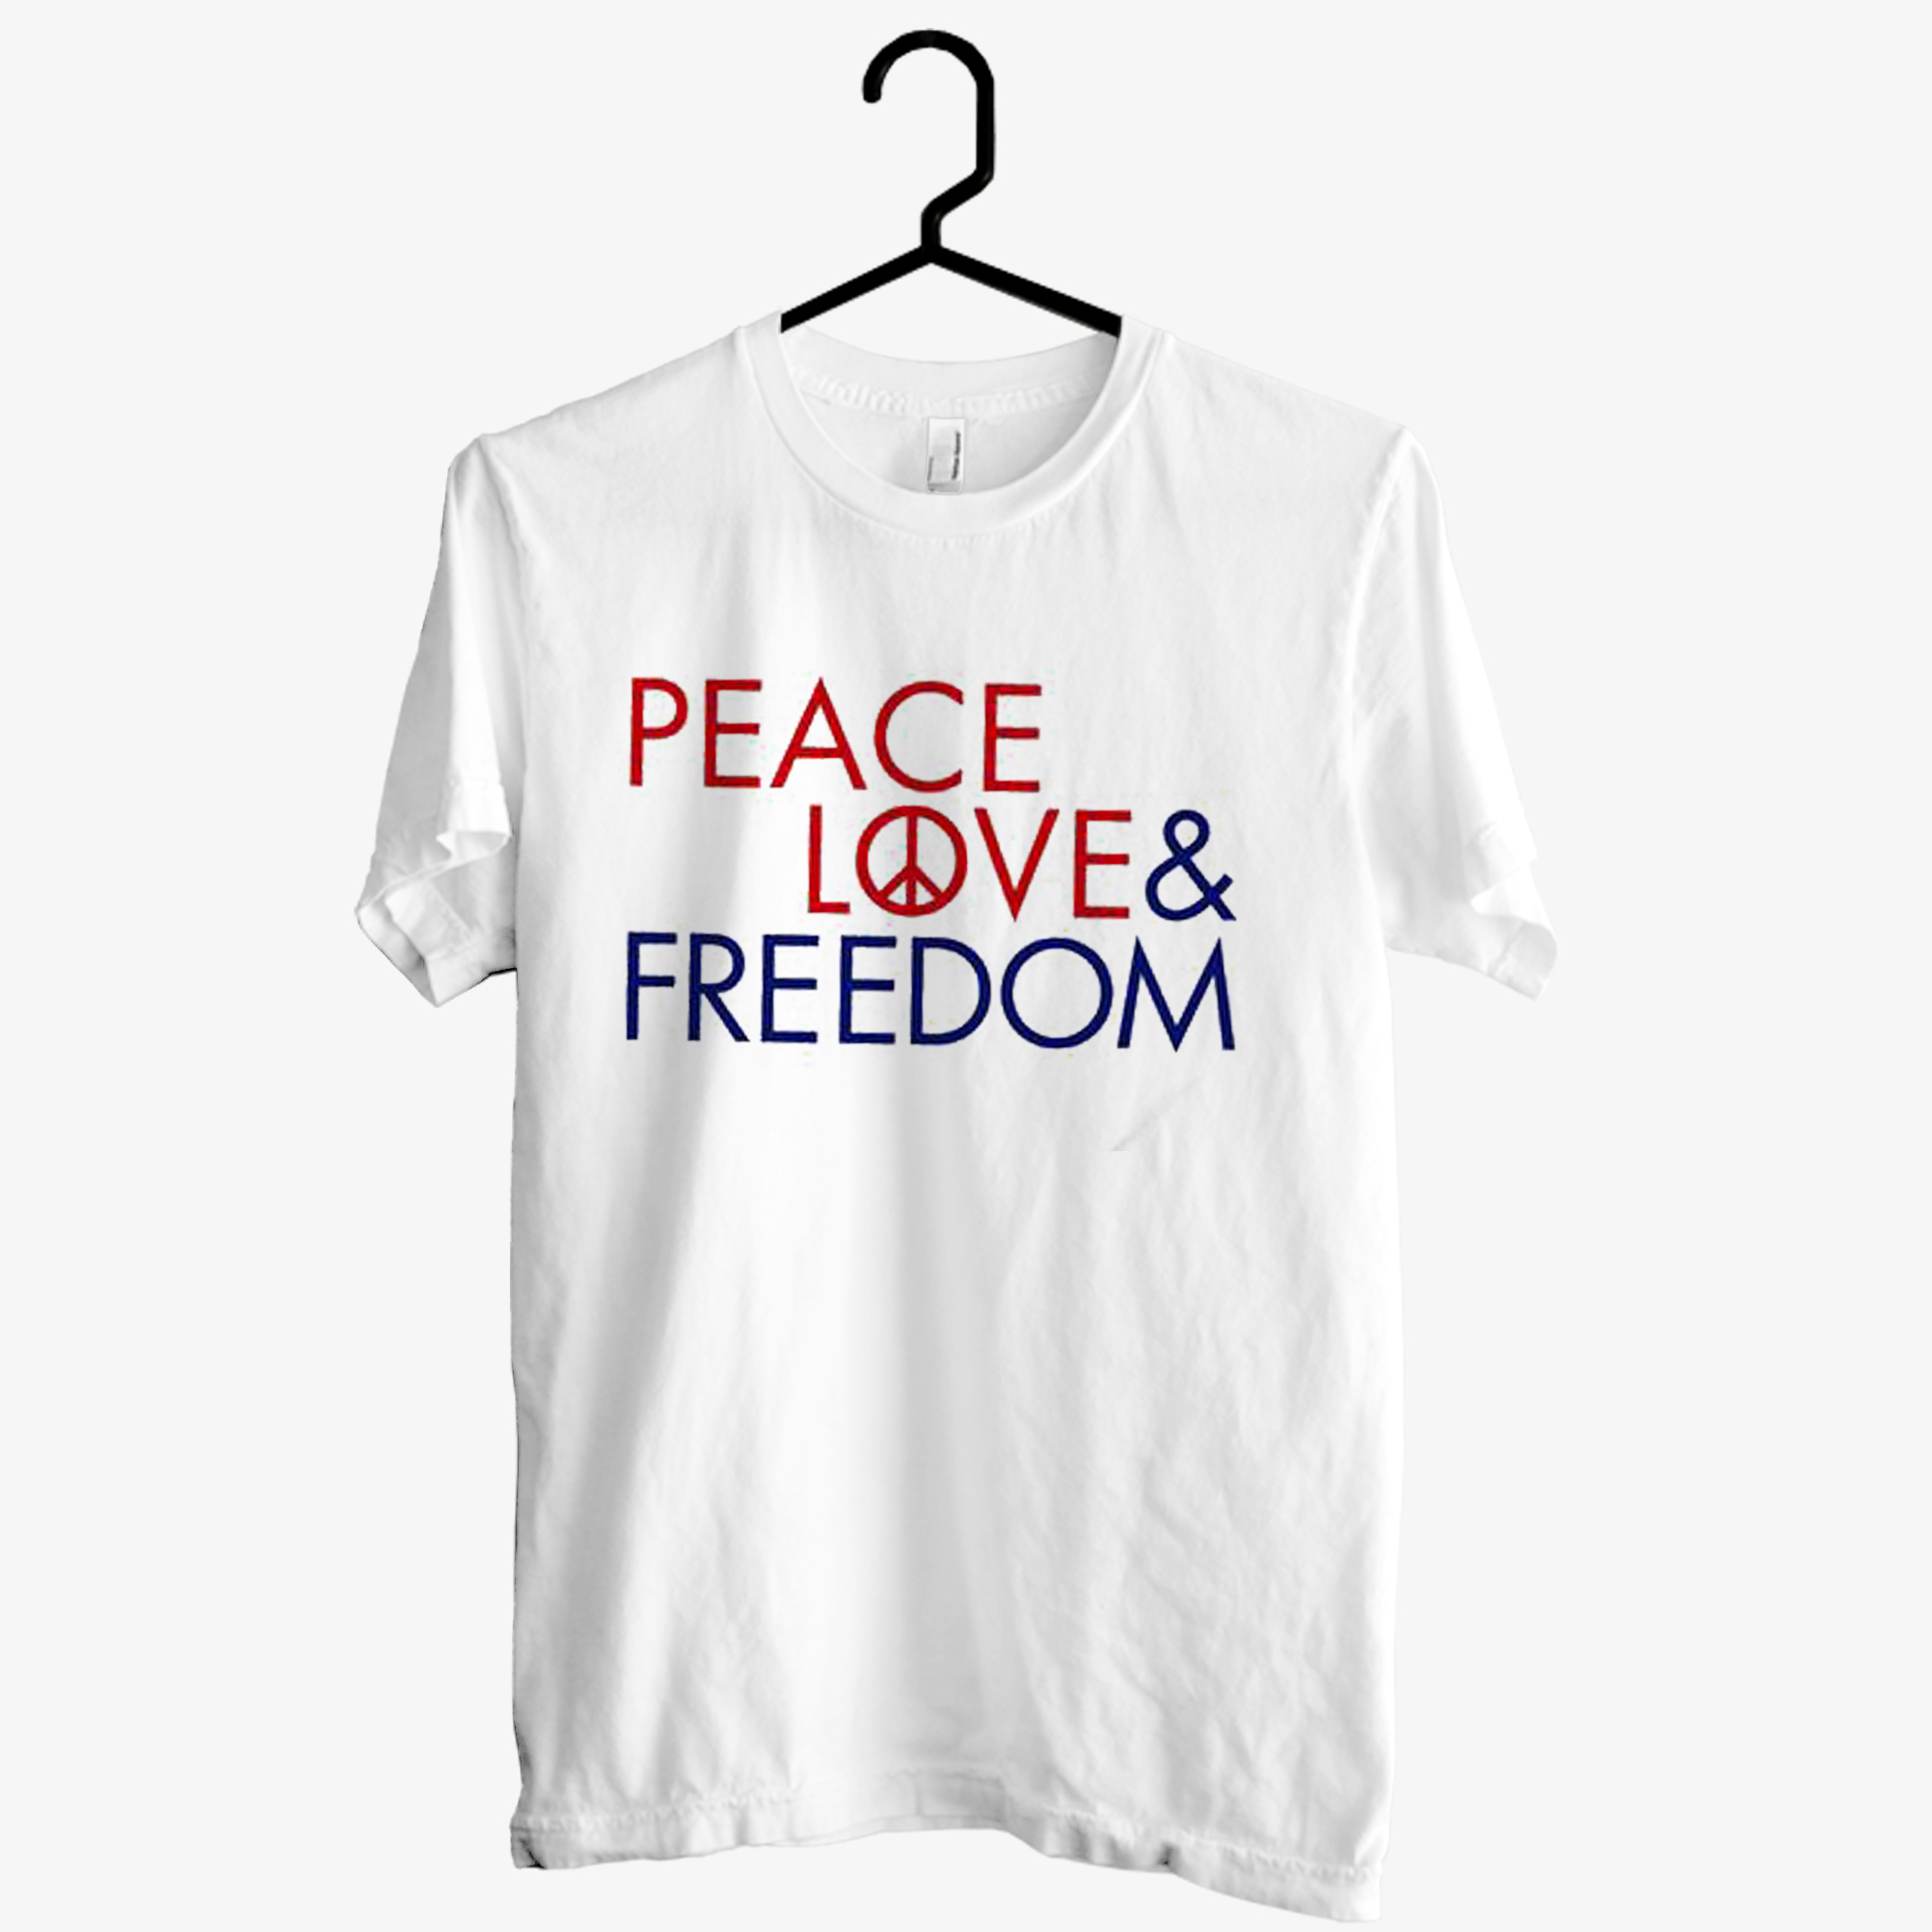 Peace Love & Freedom T shirt